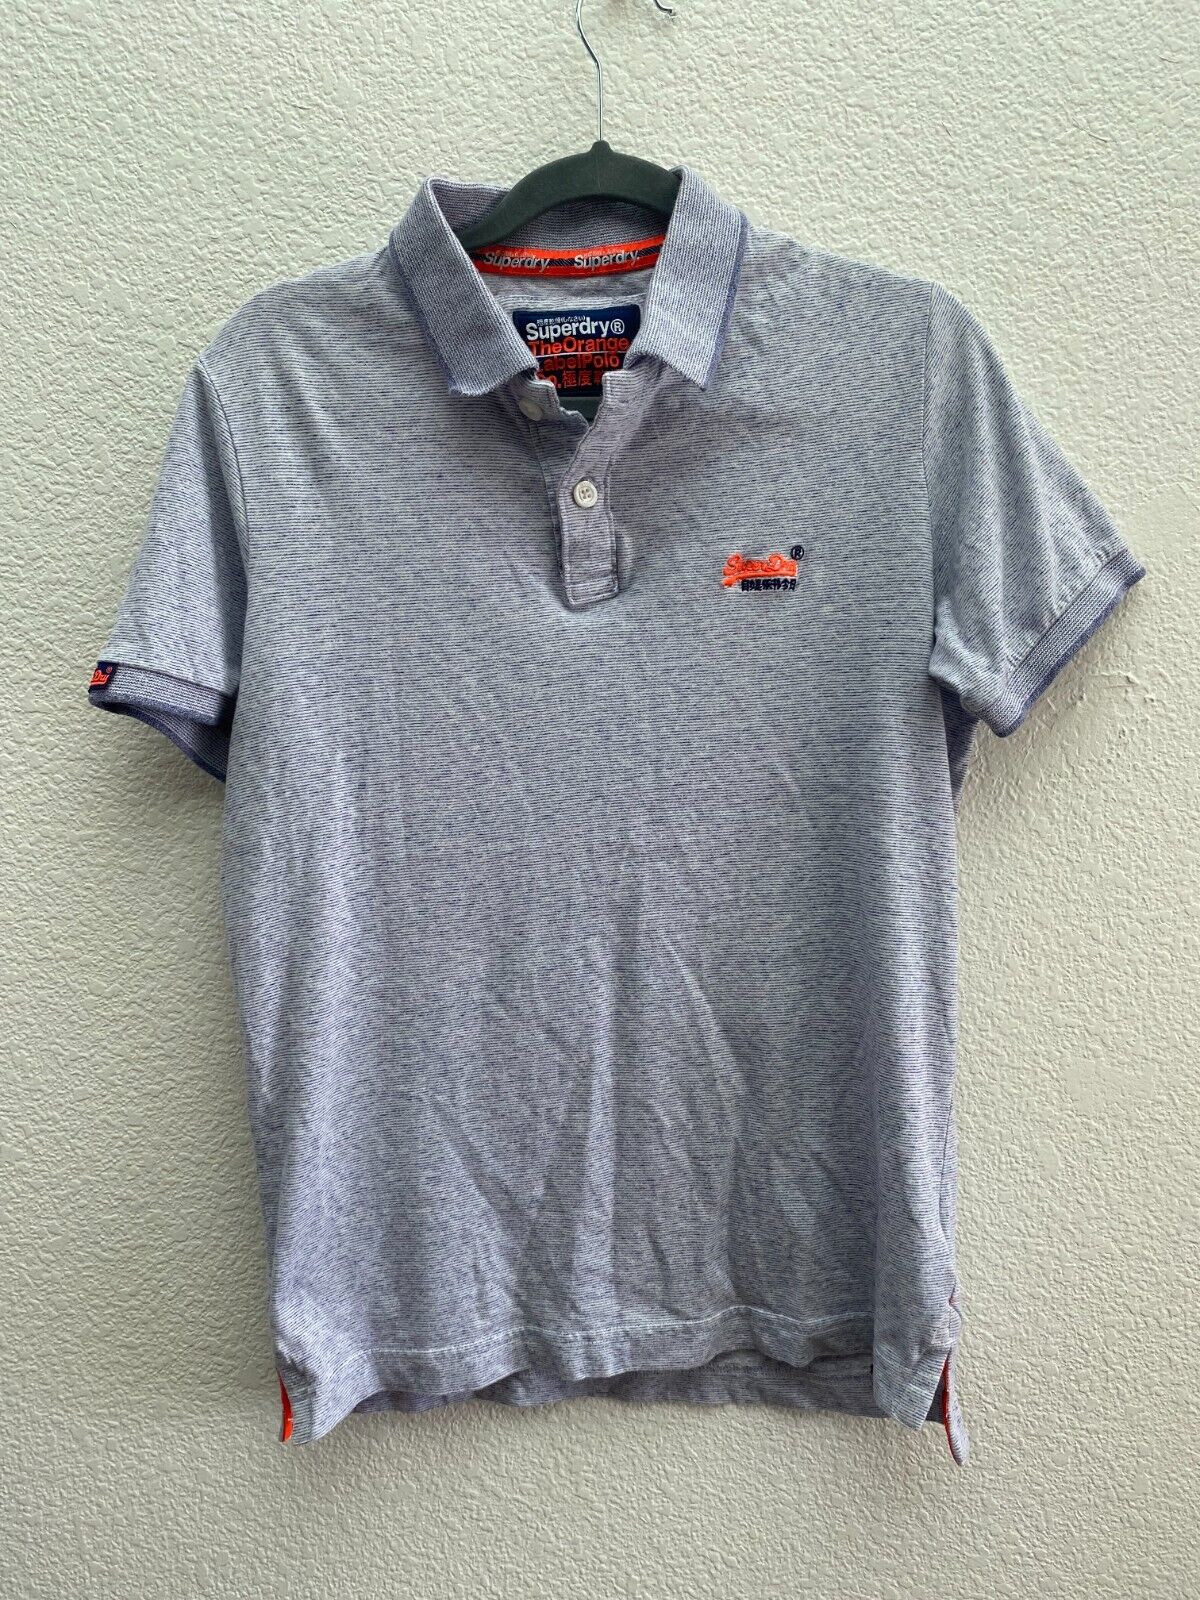 Onhandig Melodieus Andere plaatsen Superdry The Orange Label Polo Shirt Men's Medium Blue Color Striped | eBay